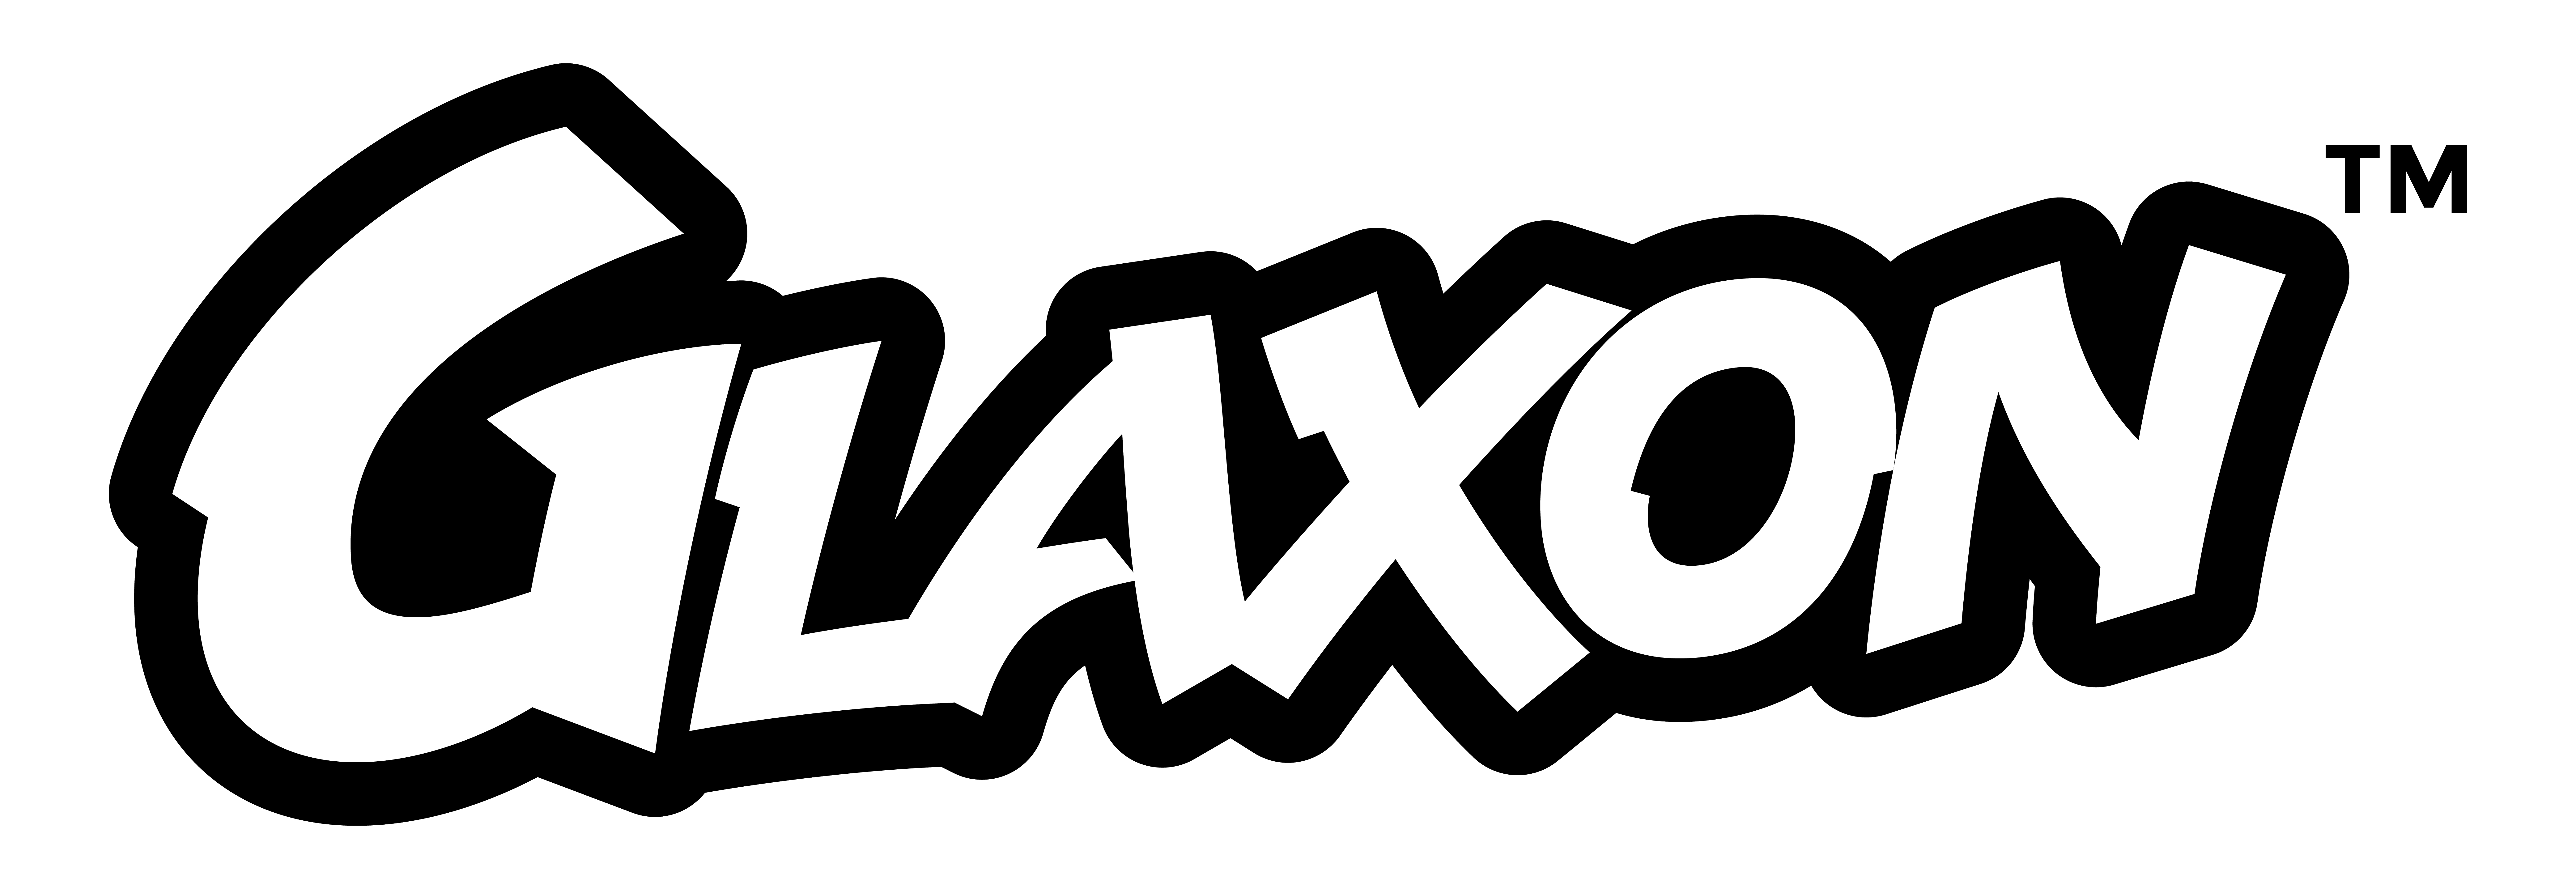 Glaxon Logo 2021